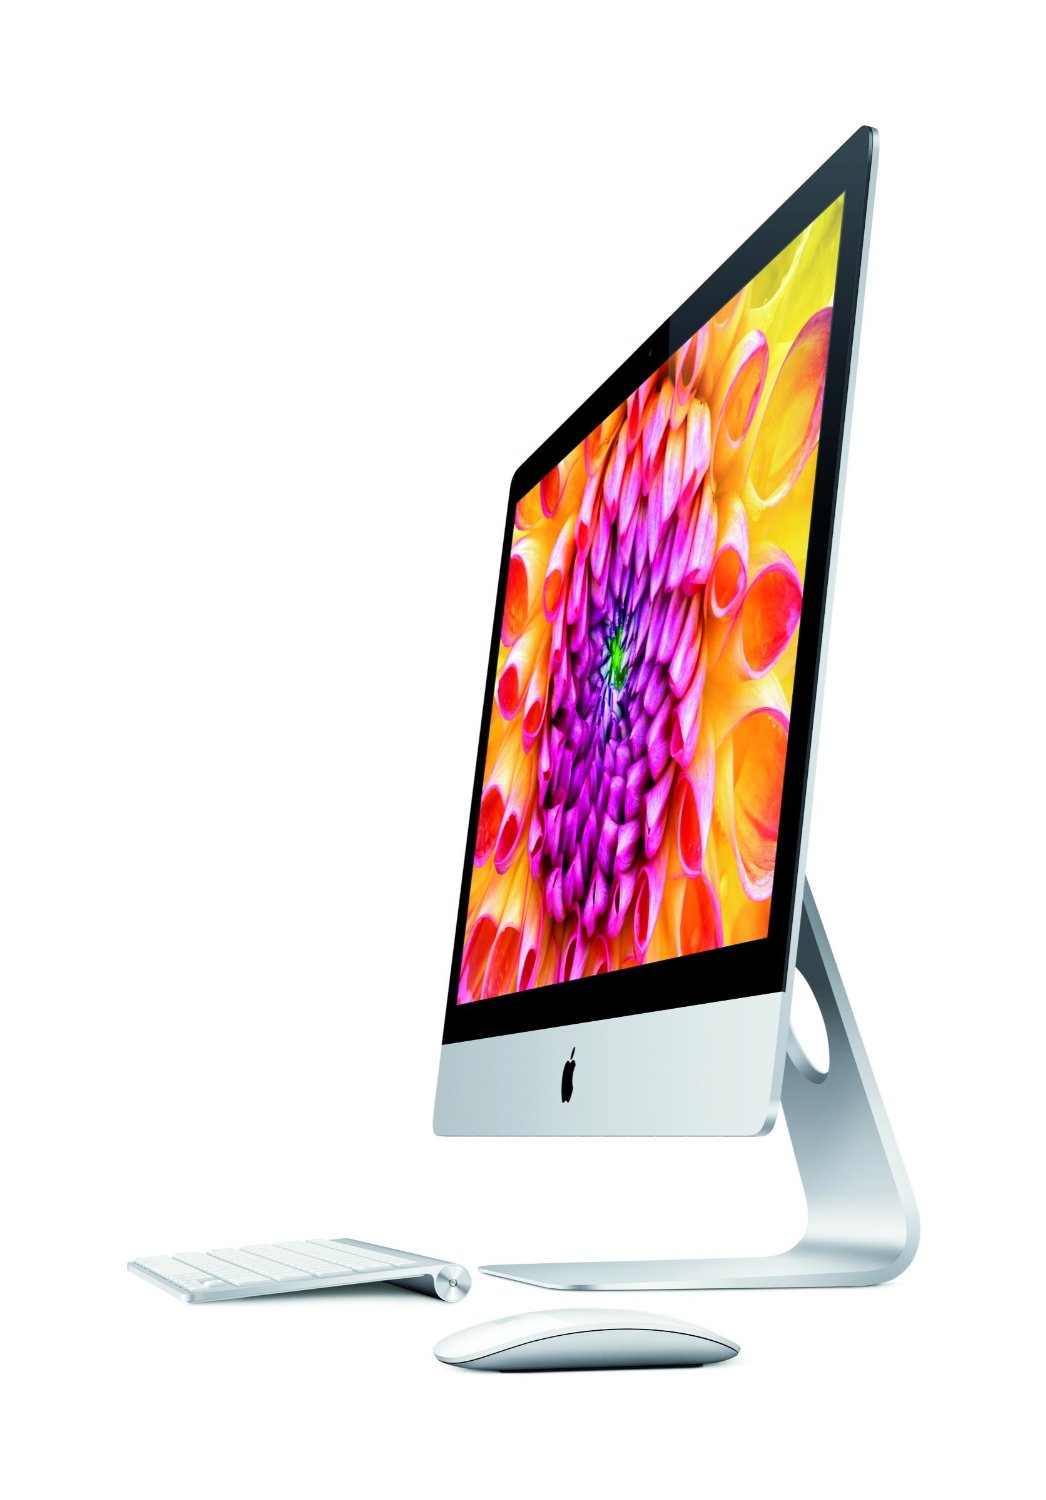 آل این وان - کامپیوتر آماده -ALL IN ONE PC اپل-Apple iMac ME089- NEW 27 Inch